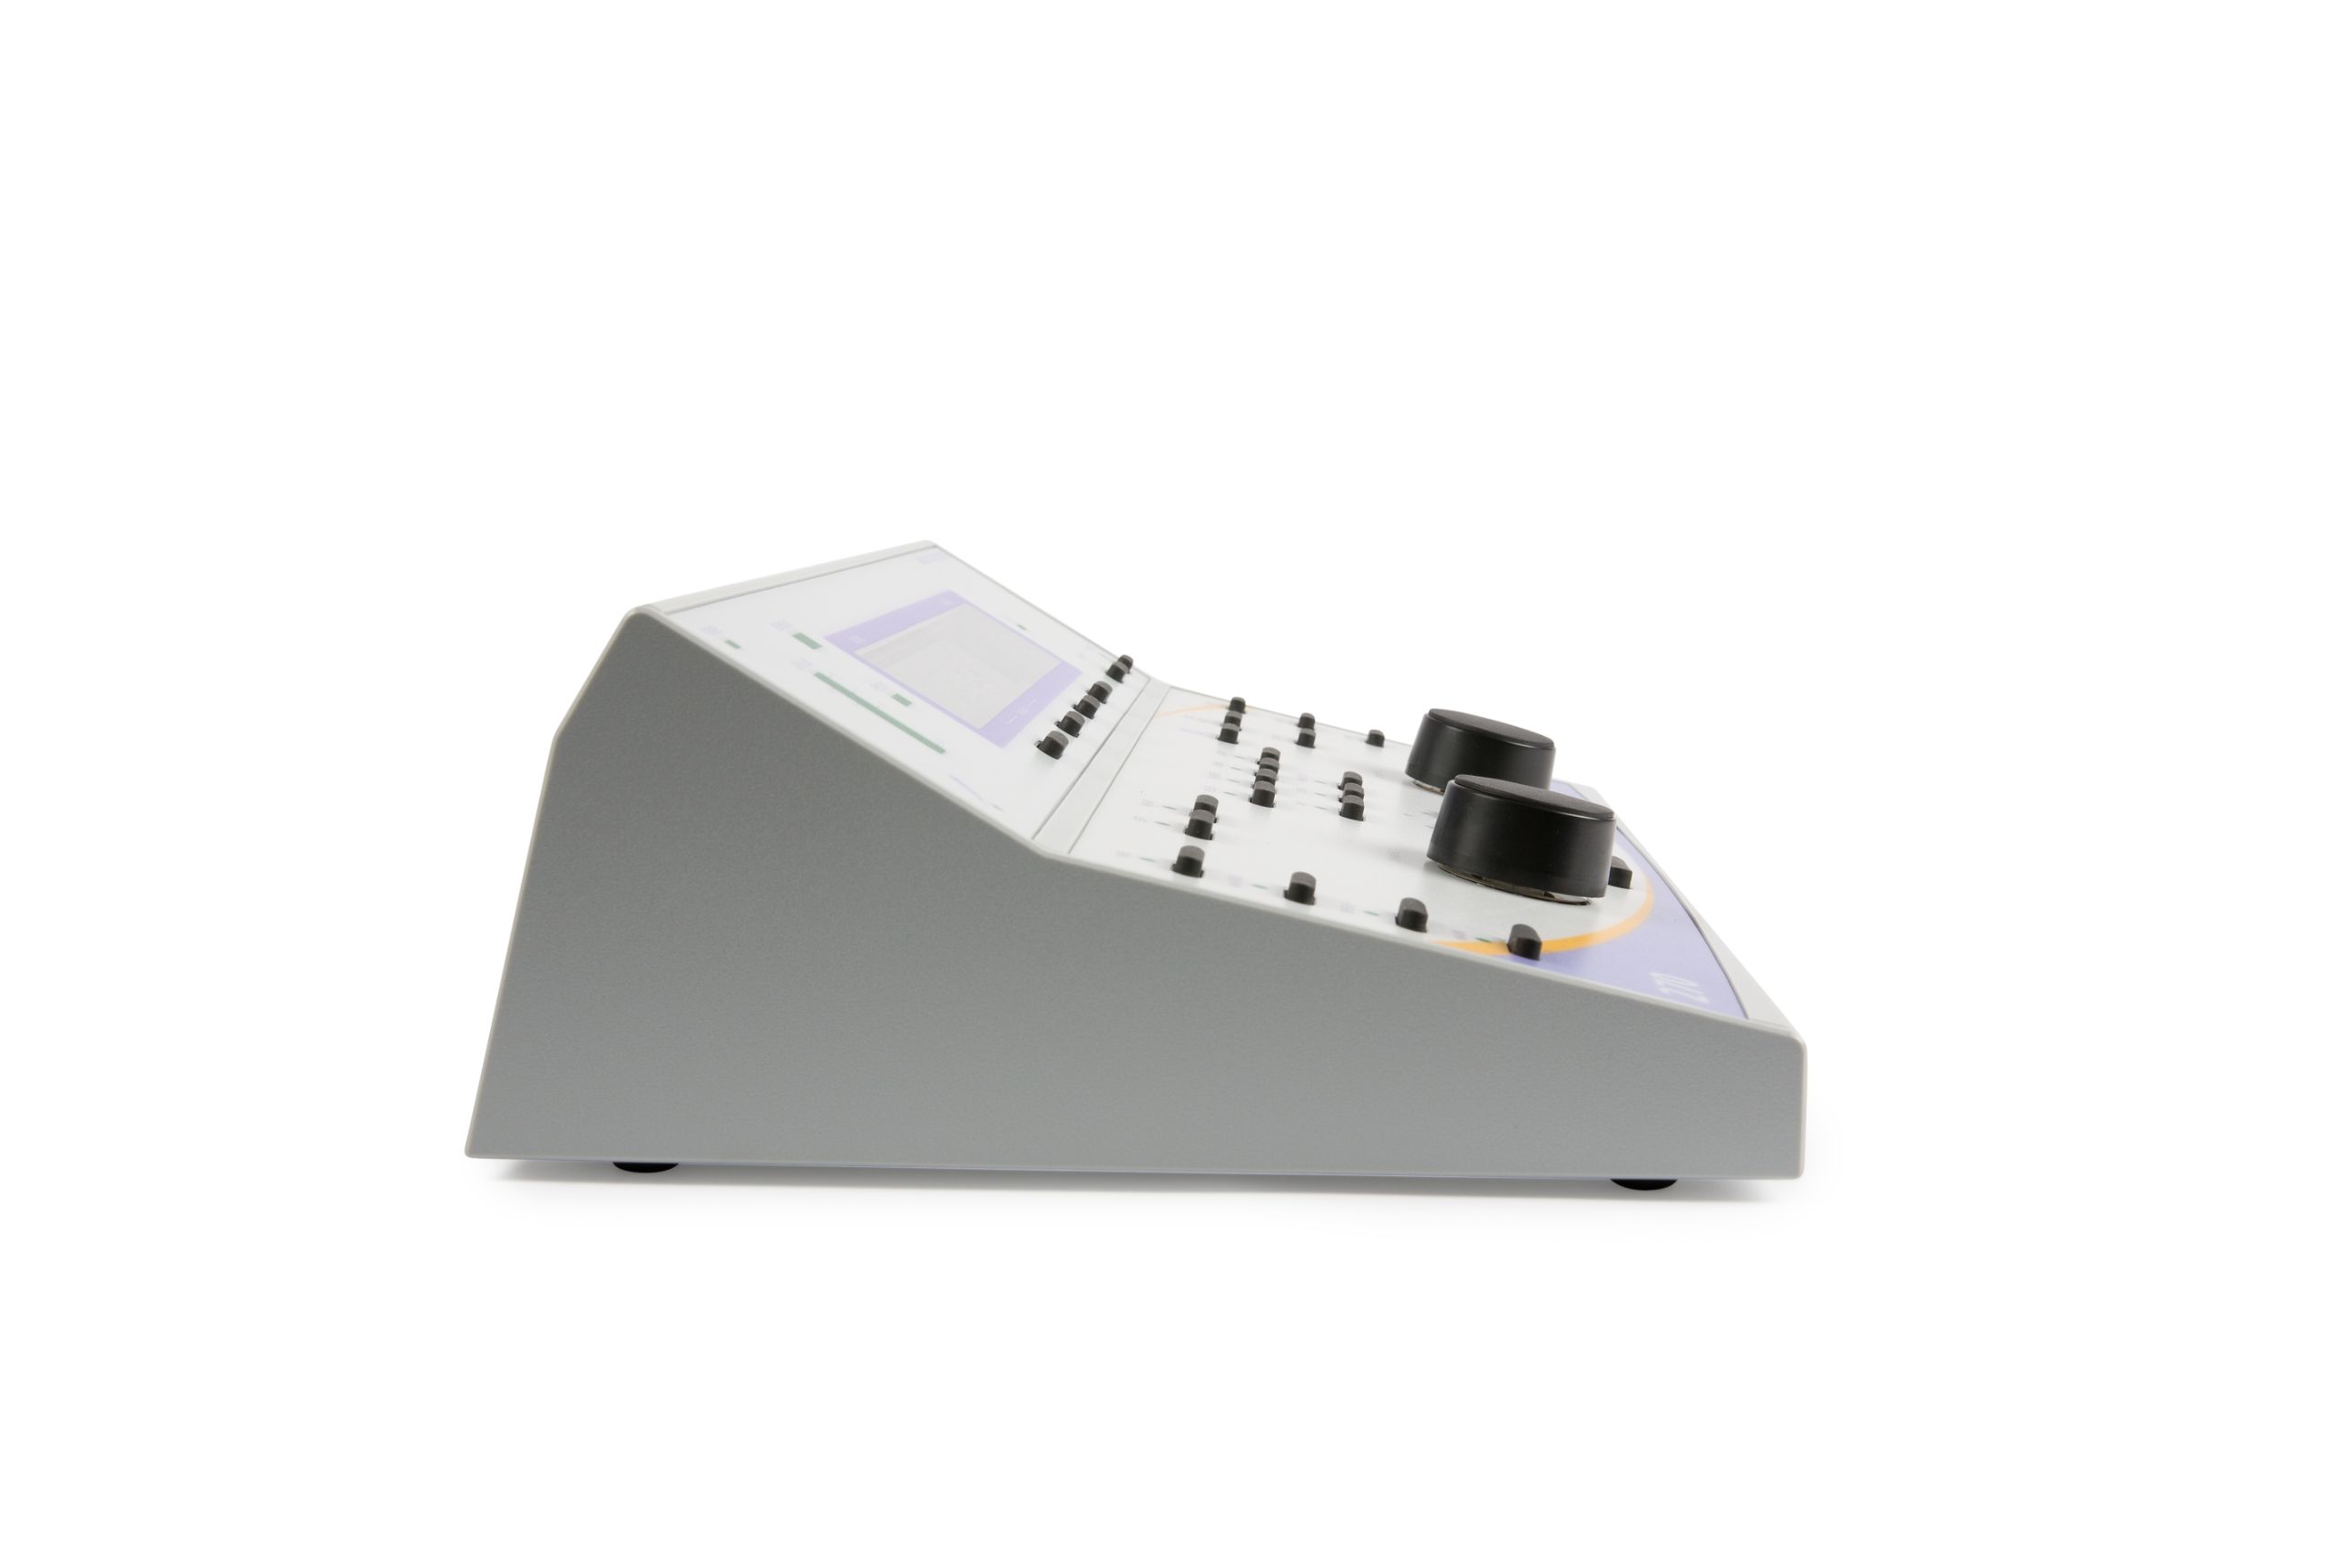 Amplivox 270 Diagnostic Audiometer